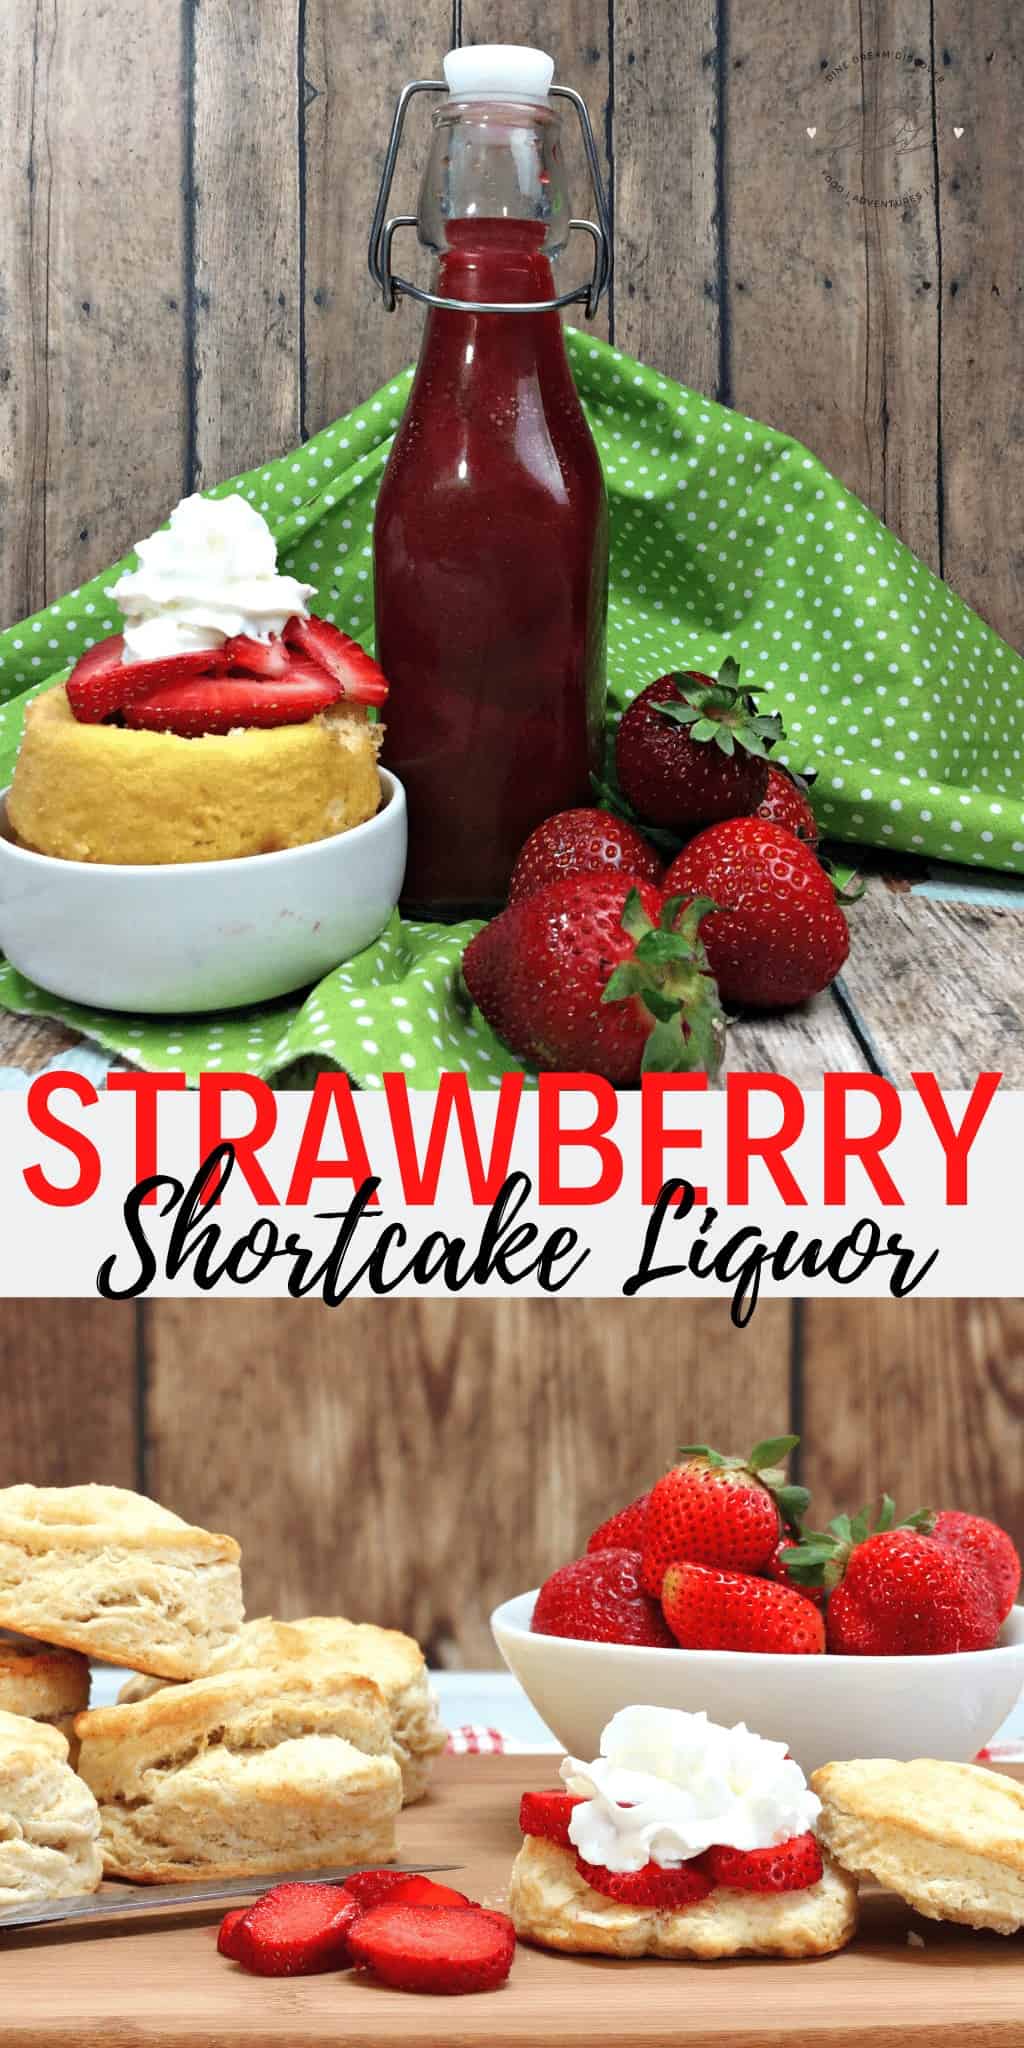 Strawberry Shortcake Liquor